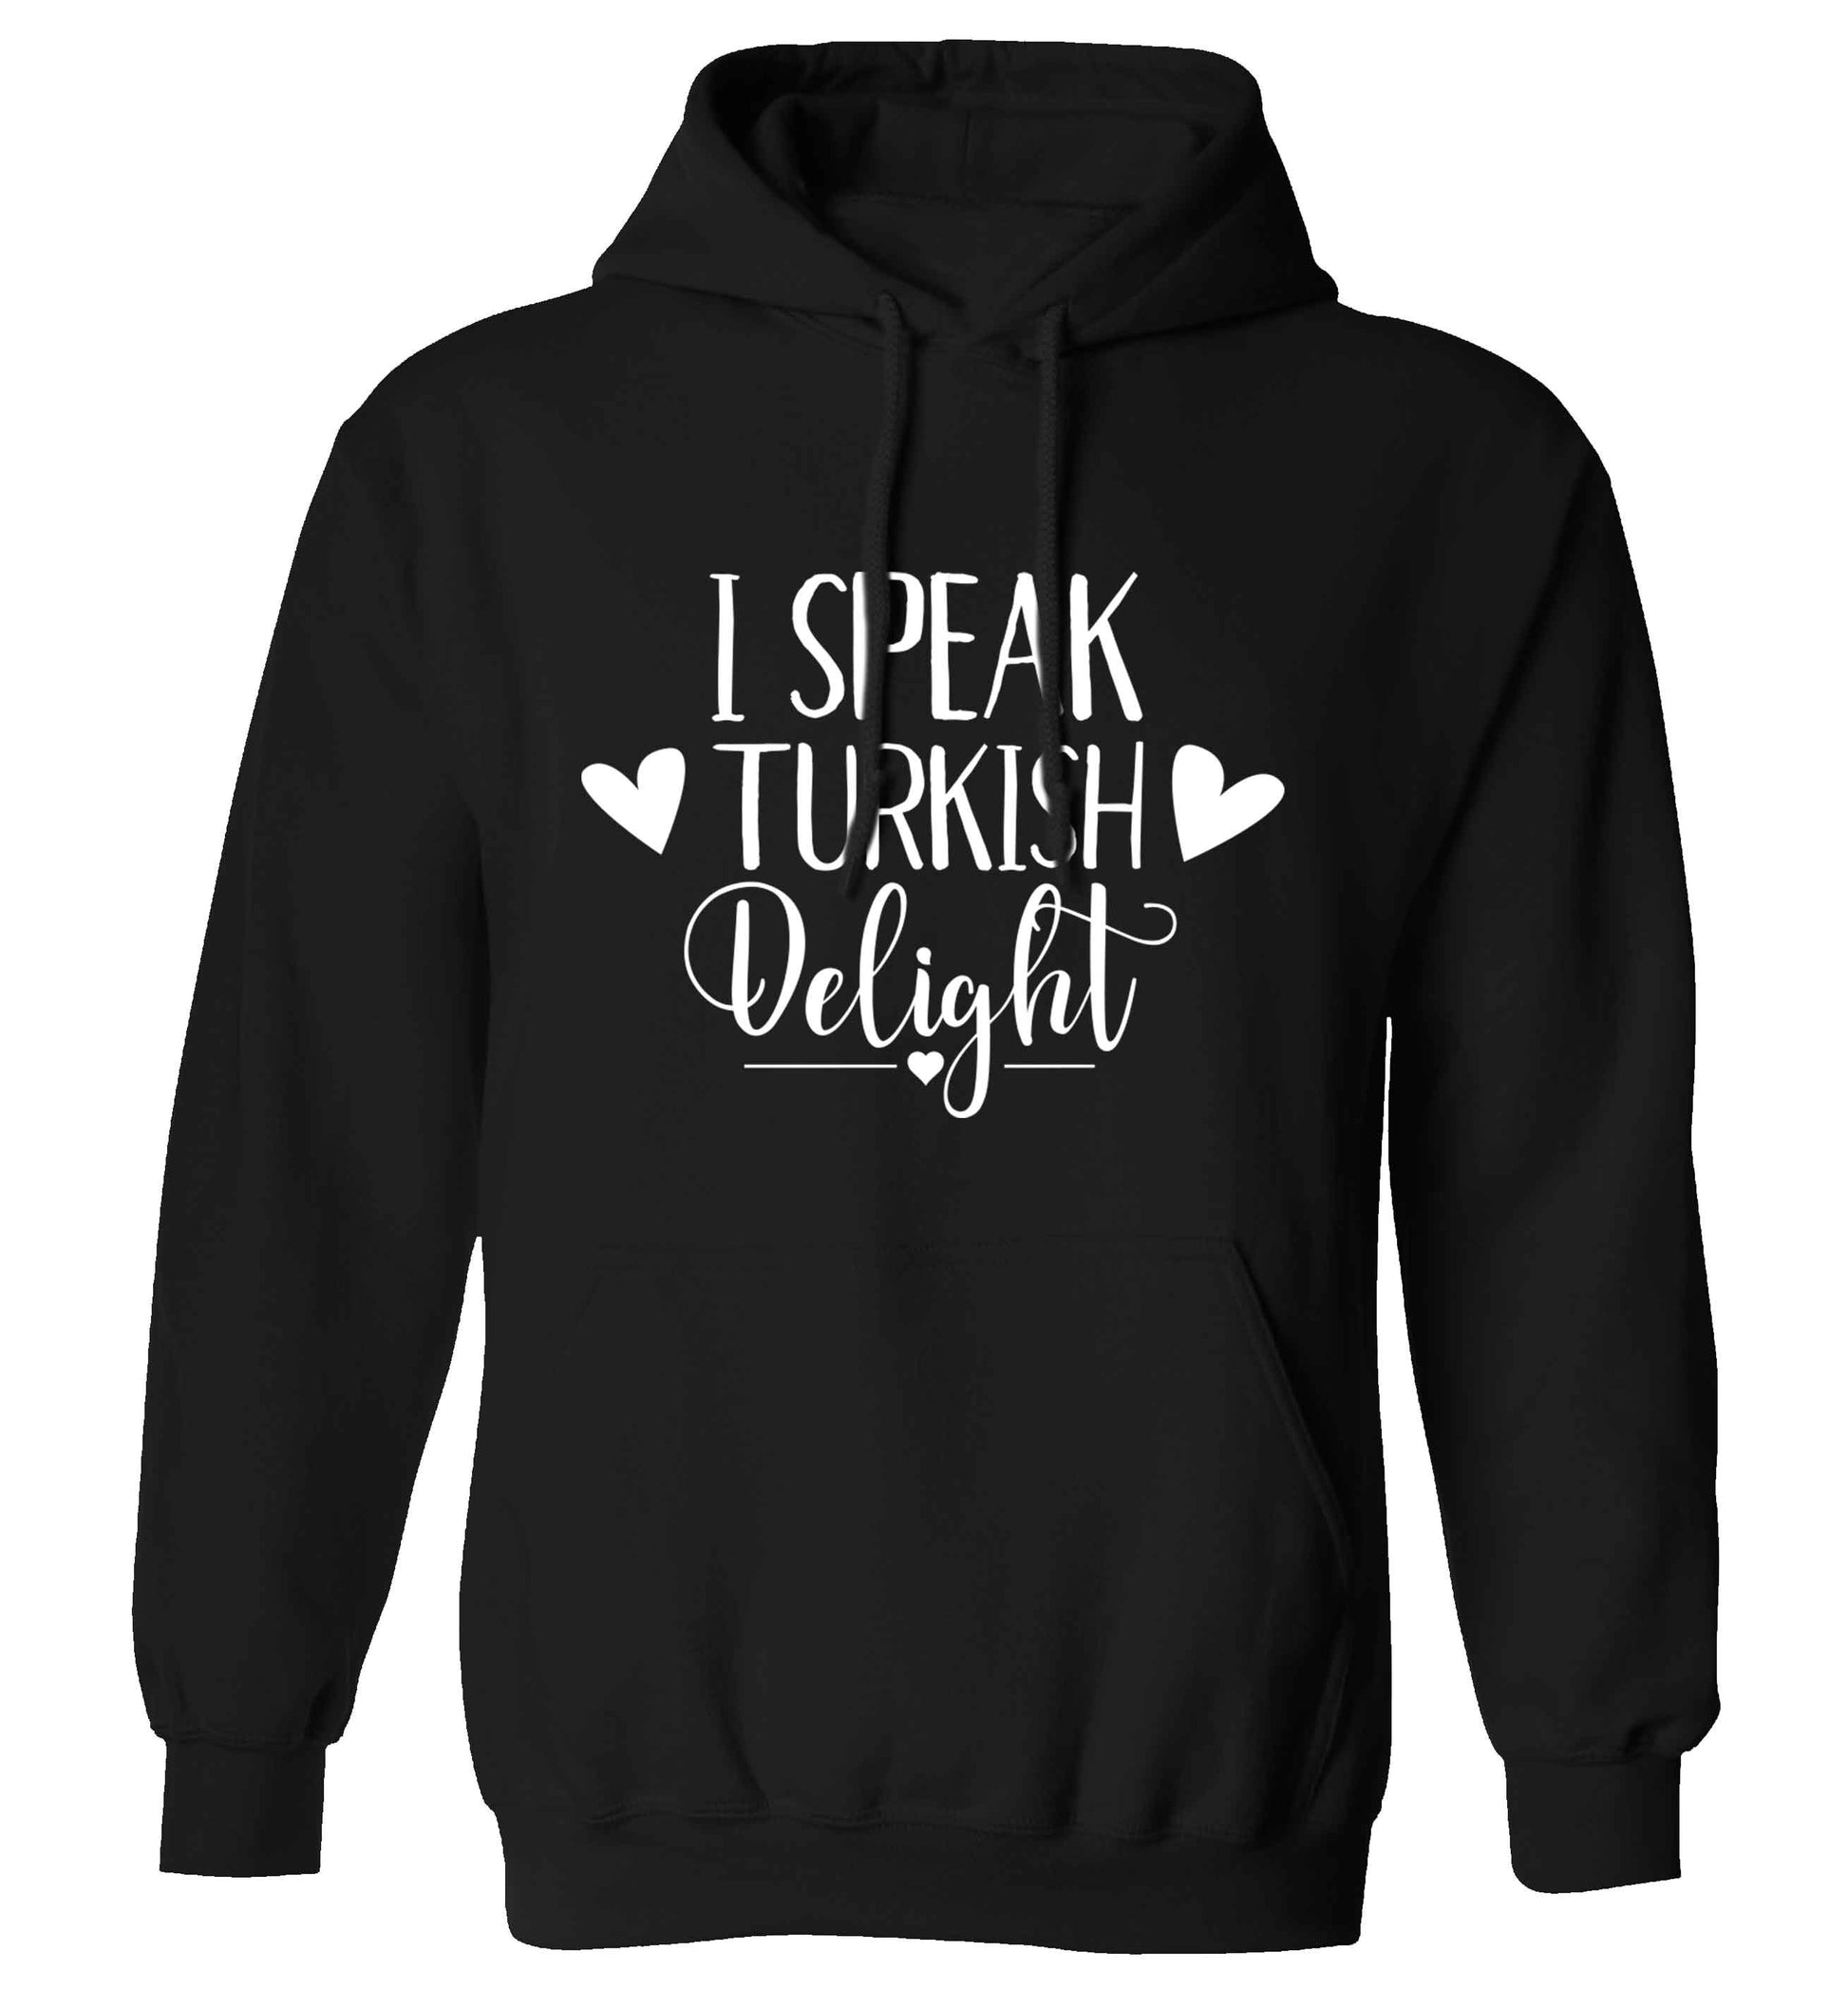 I speak turkish...delight adults unisex black hoodie 2XL